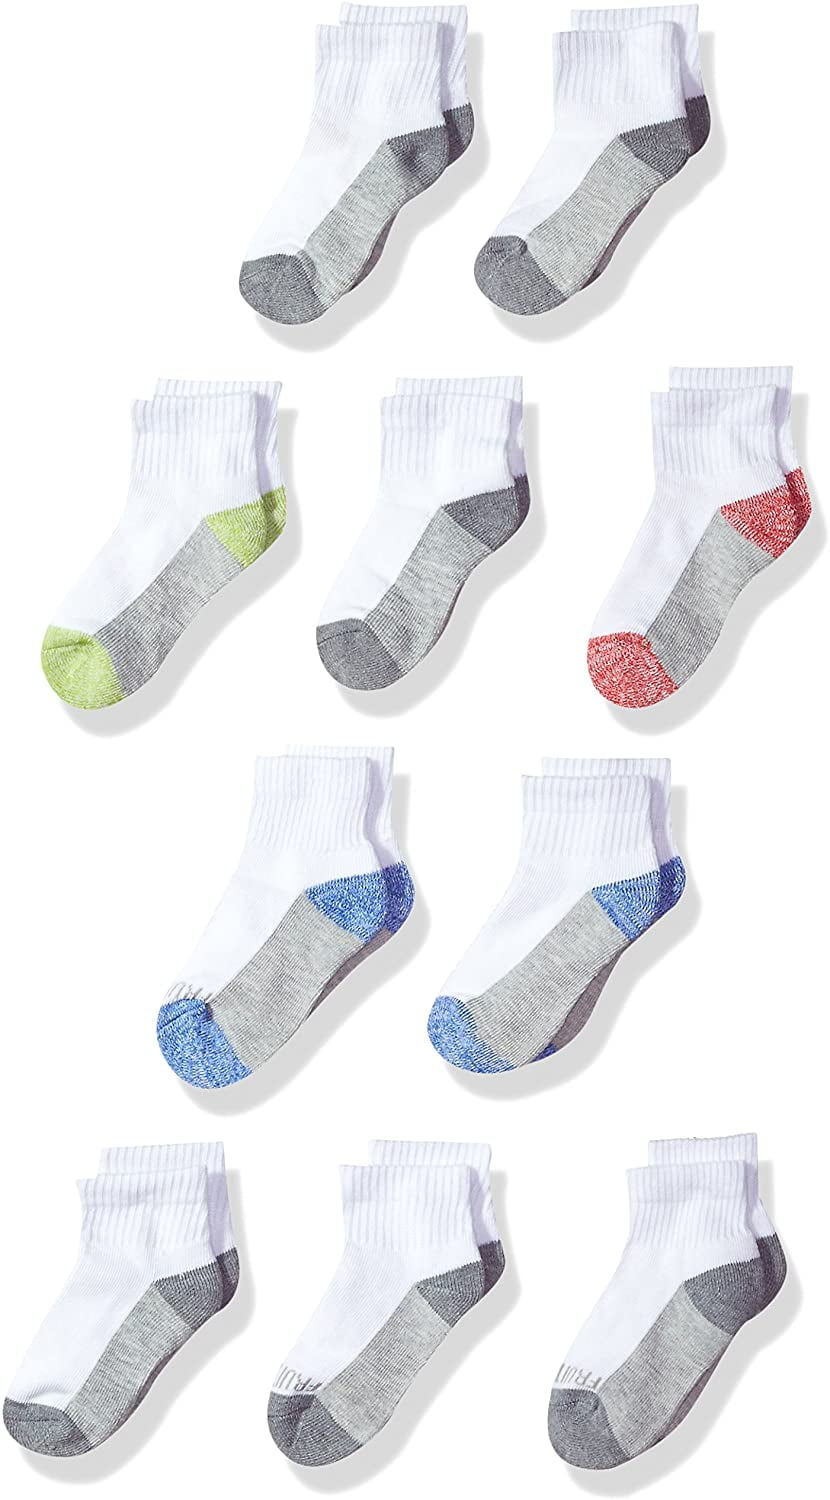 Boys' Ankle Socks, 10-Pack - Walmart.com